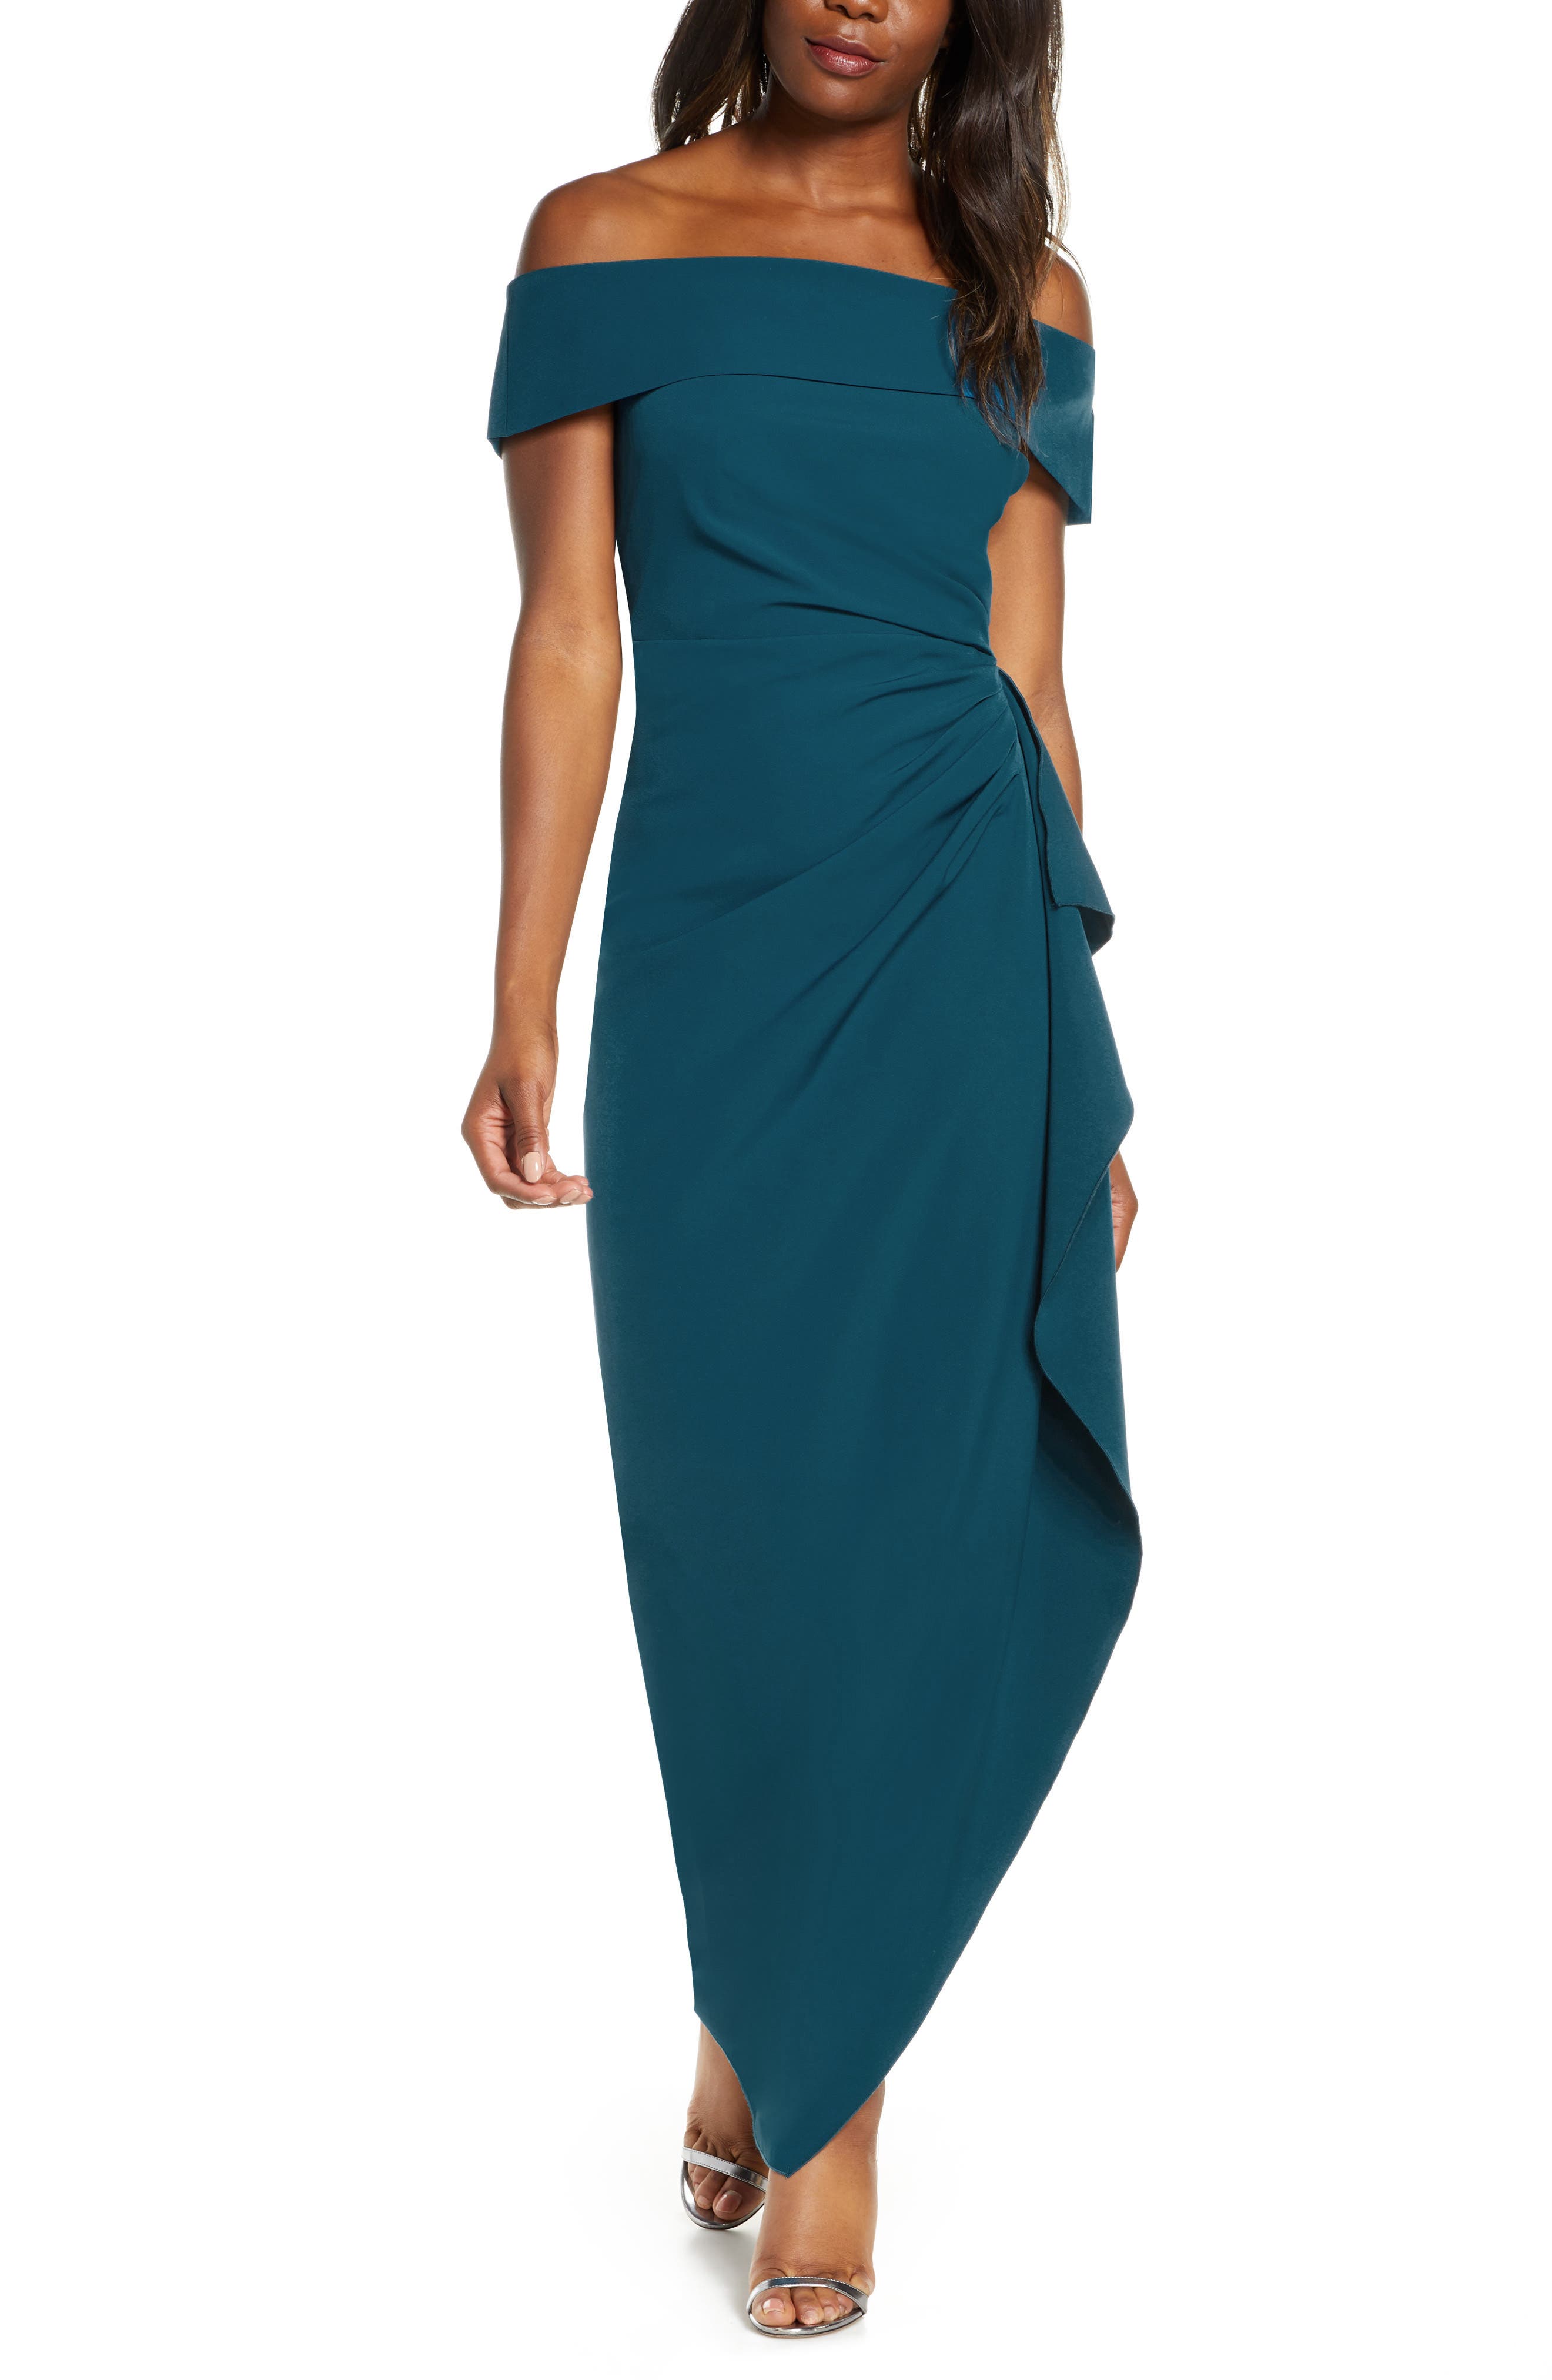 nordstrom turquoise dress